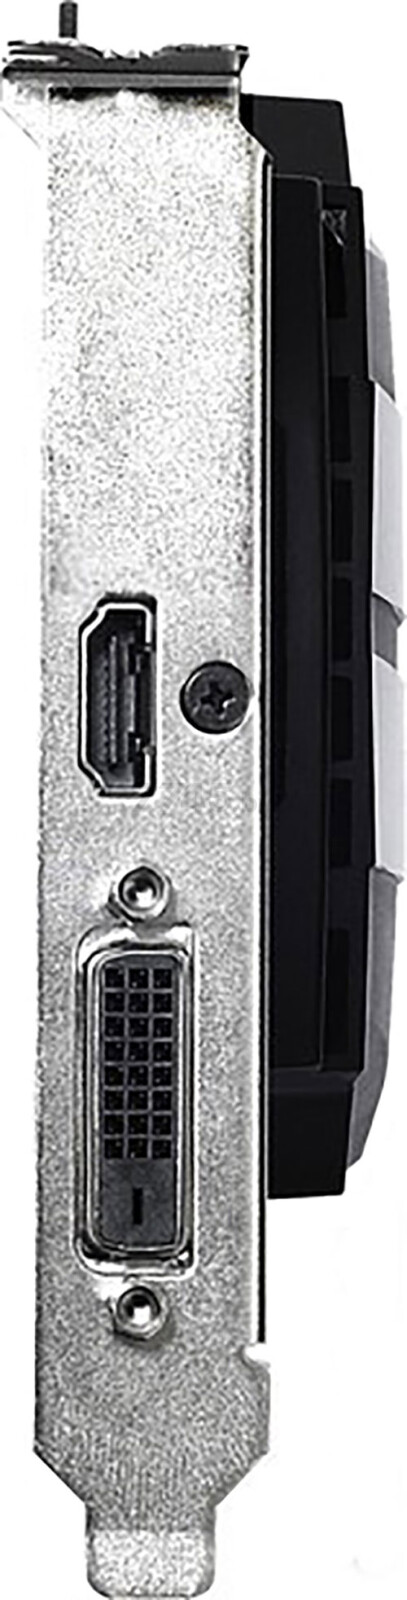 Видеокарта ASUS GeForce GT 1030 OC Phoenix 2GB GDDR5 (PH-GT1030-O2G) - Фото 3